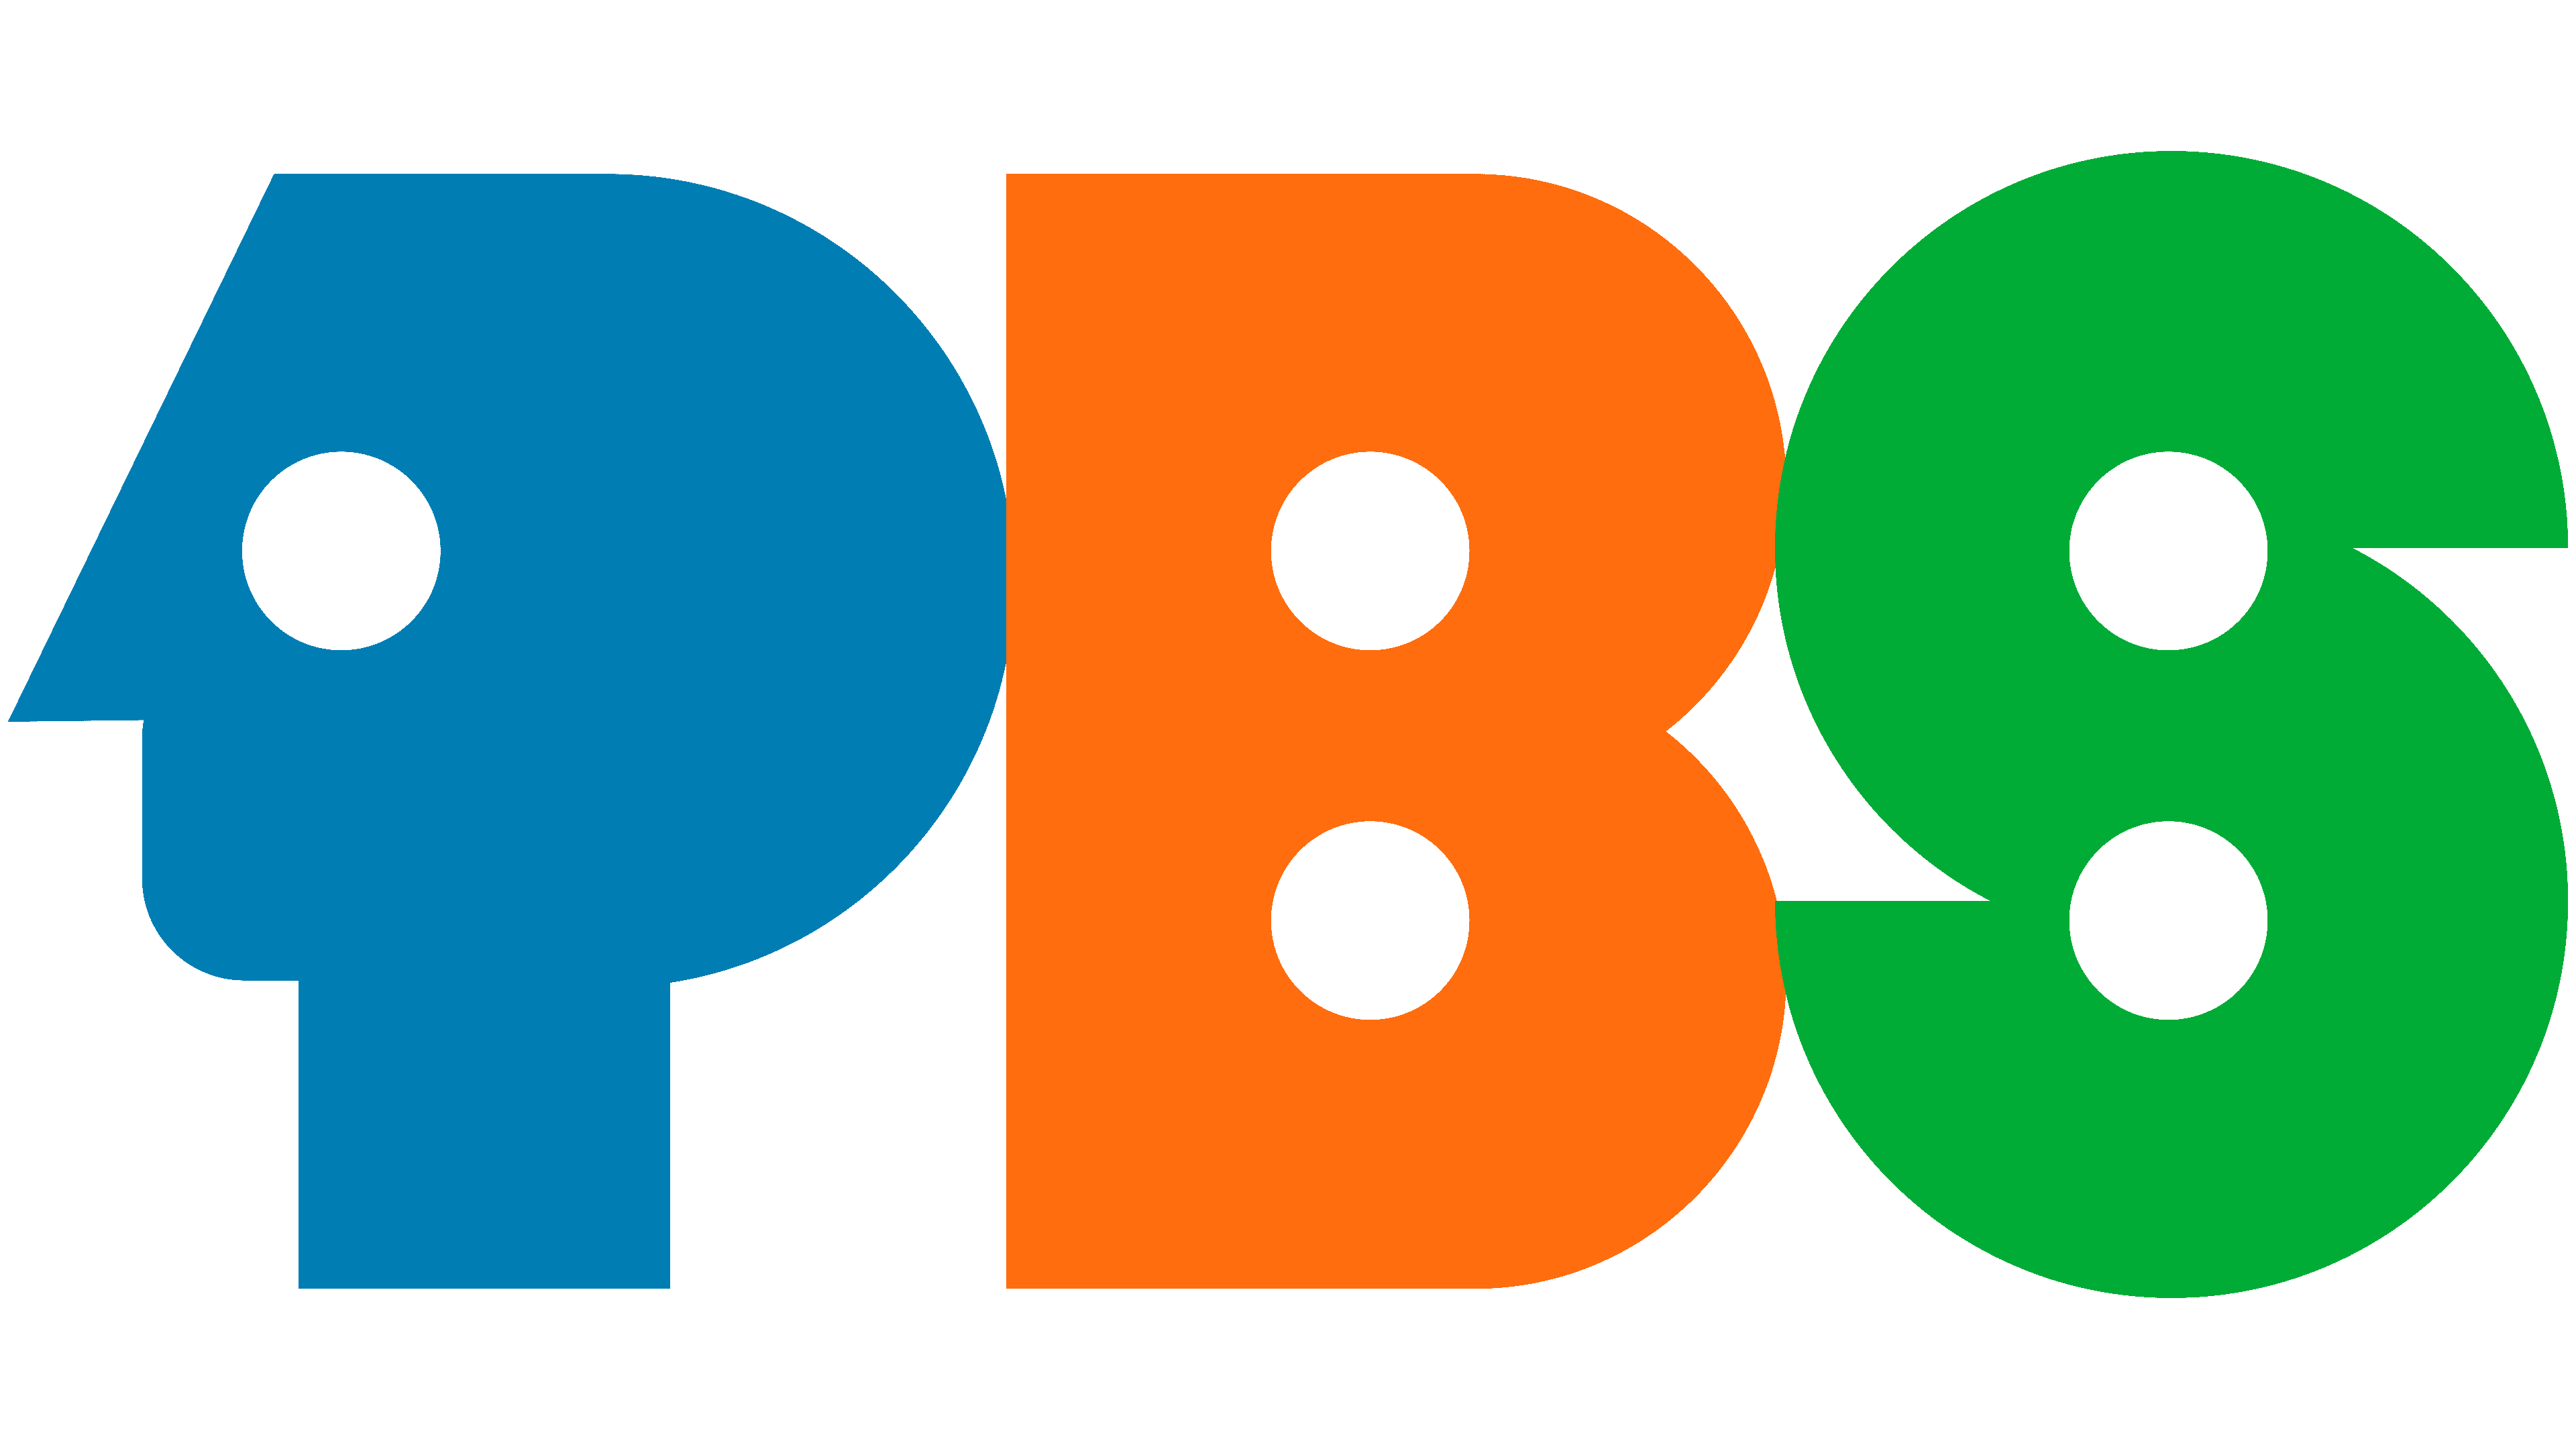 Pbs logo History of